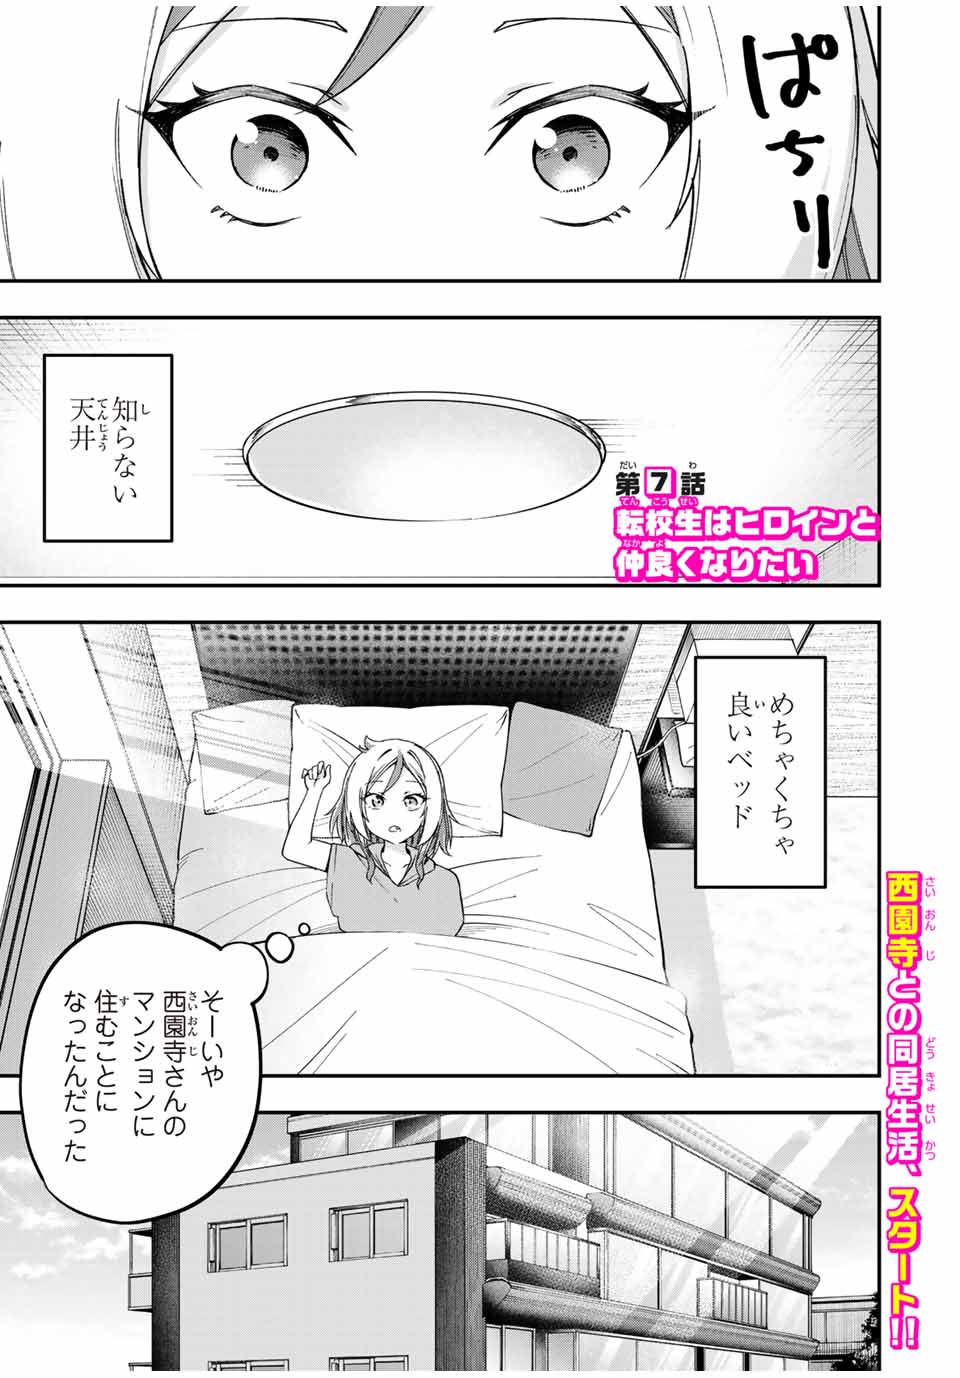 Heroine wa xx Okasegitai - Chapter 7 - Page 1